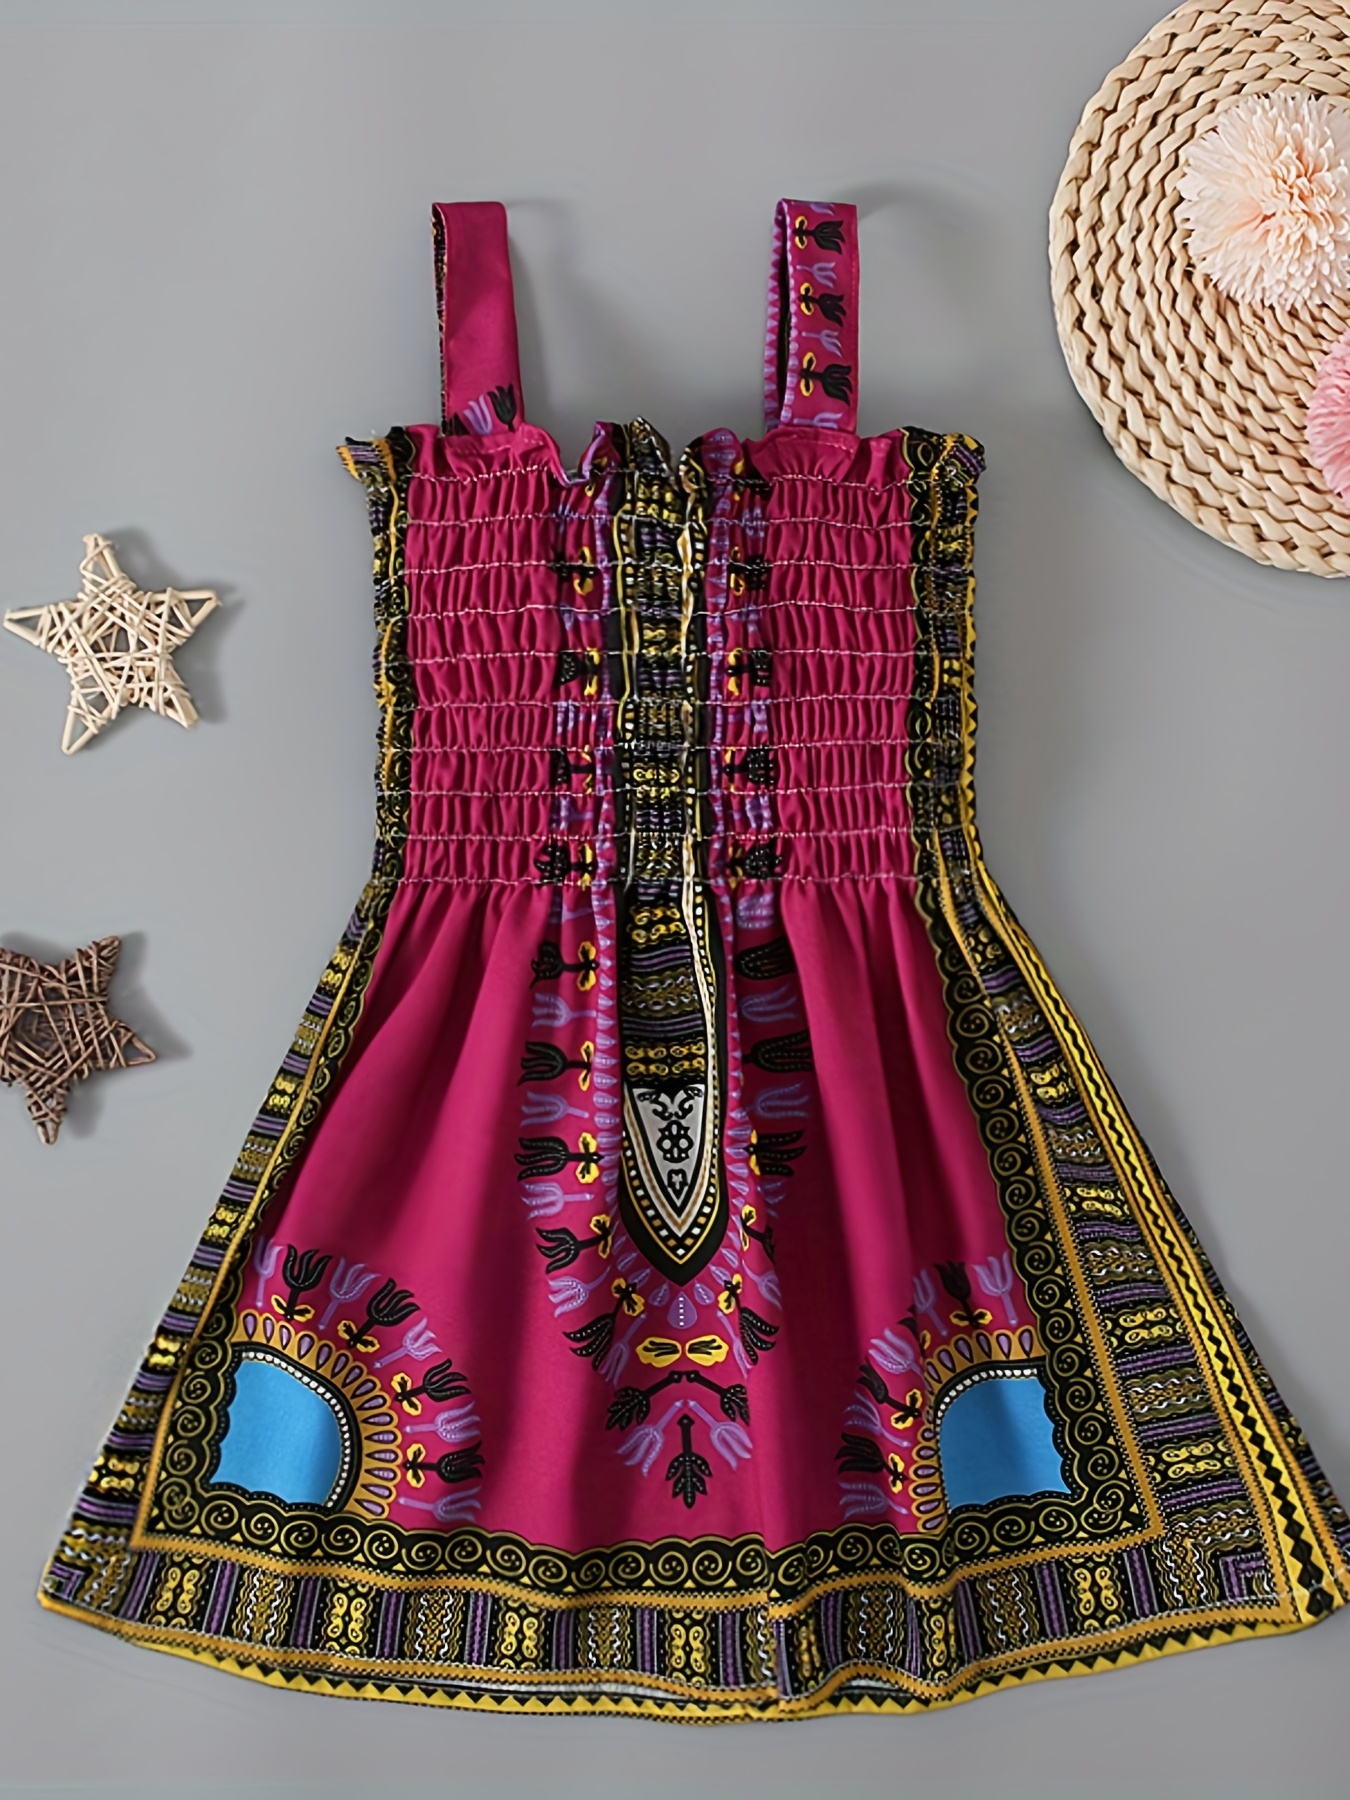 The Kente Cloth Frilled Dress